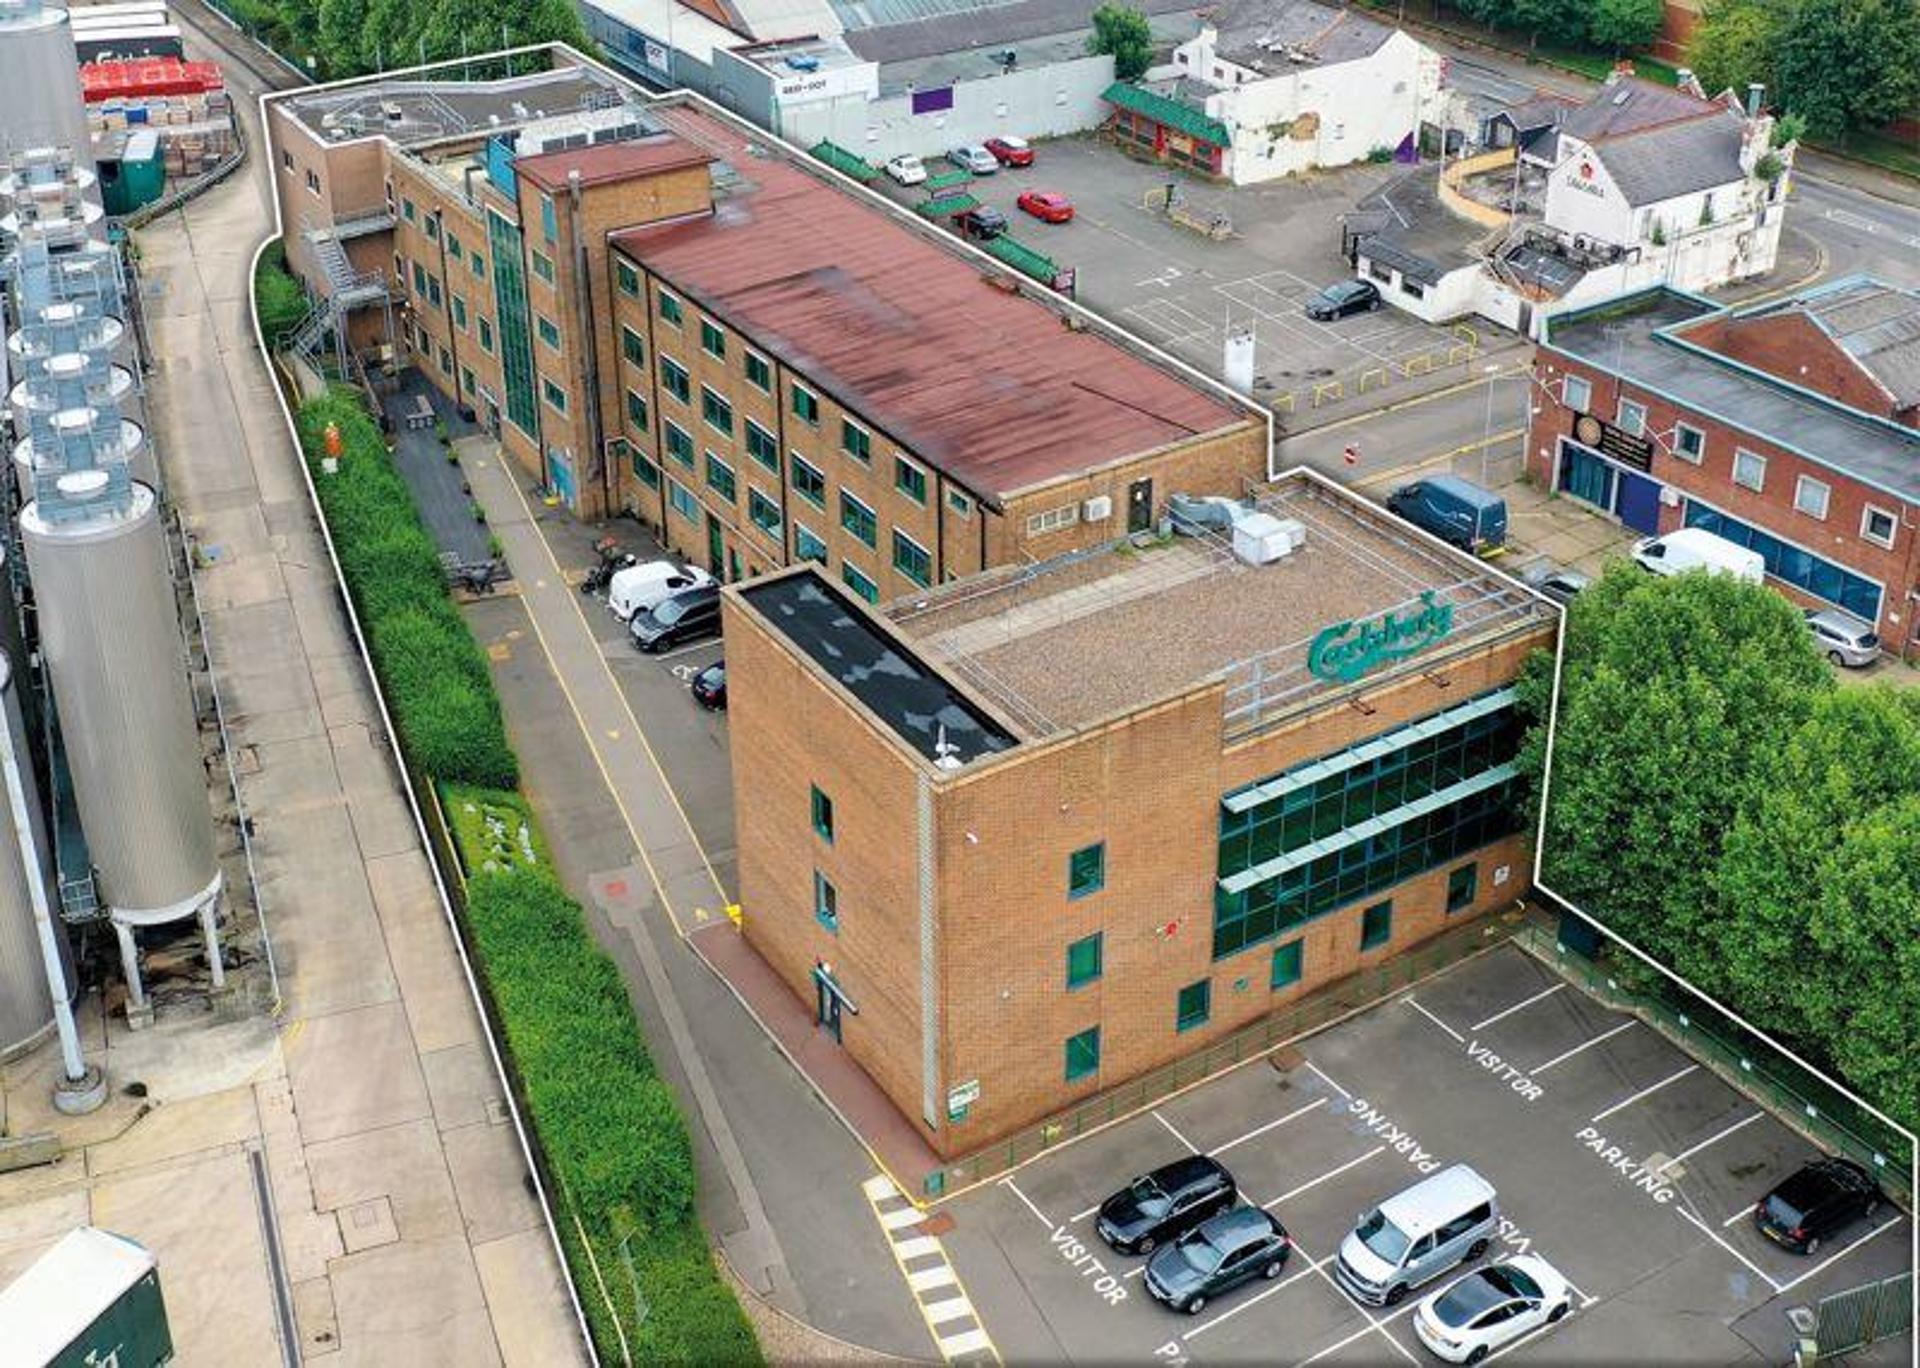 Former Carlsberg offices on the market for £2.7m